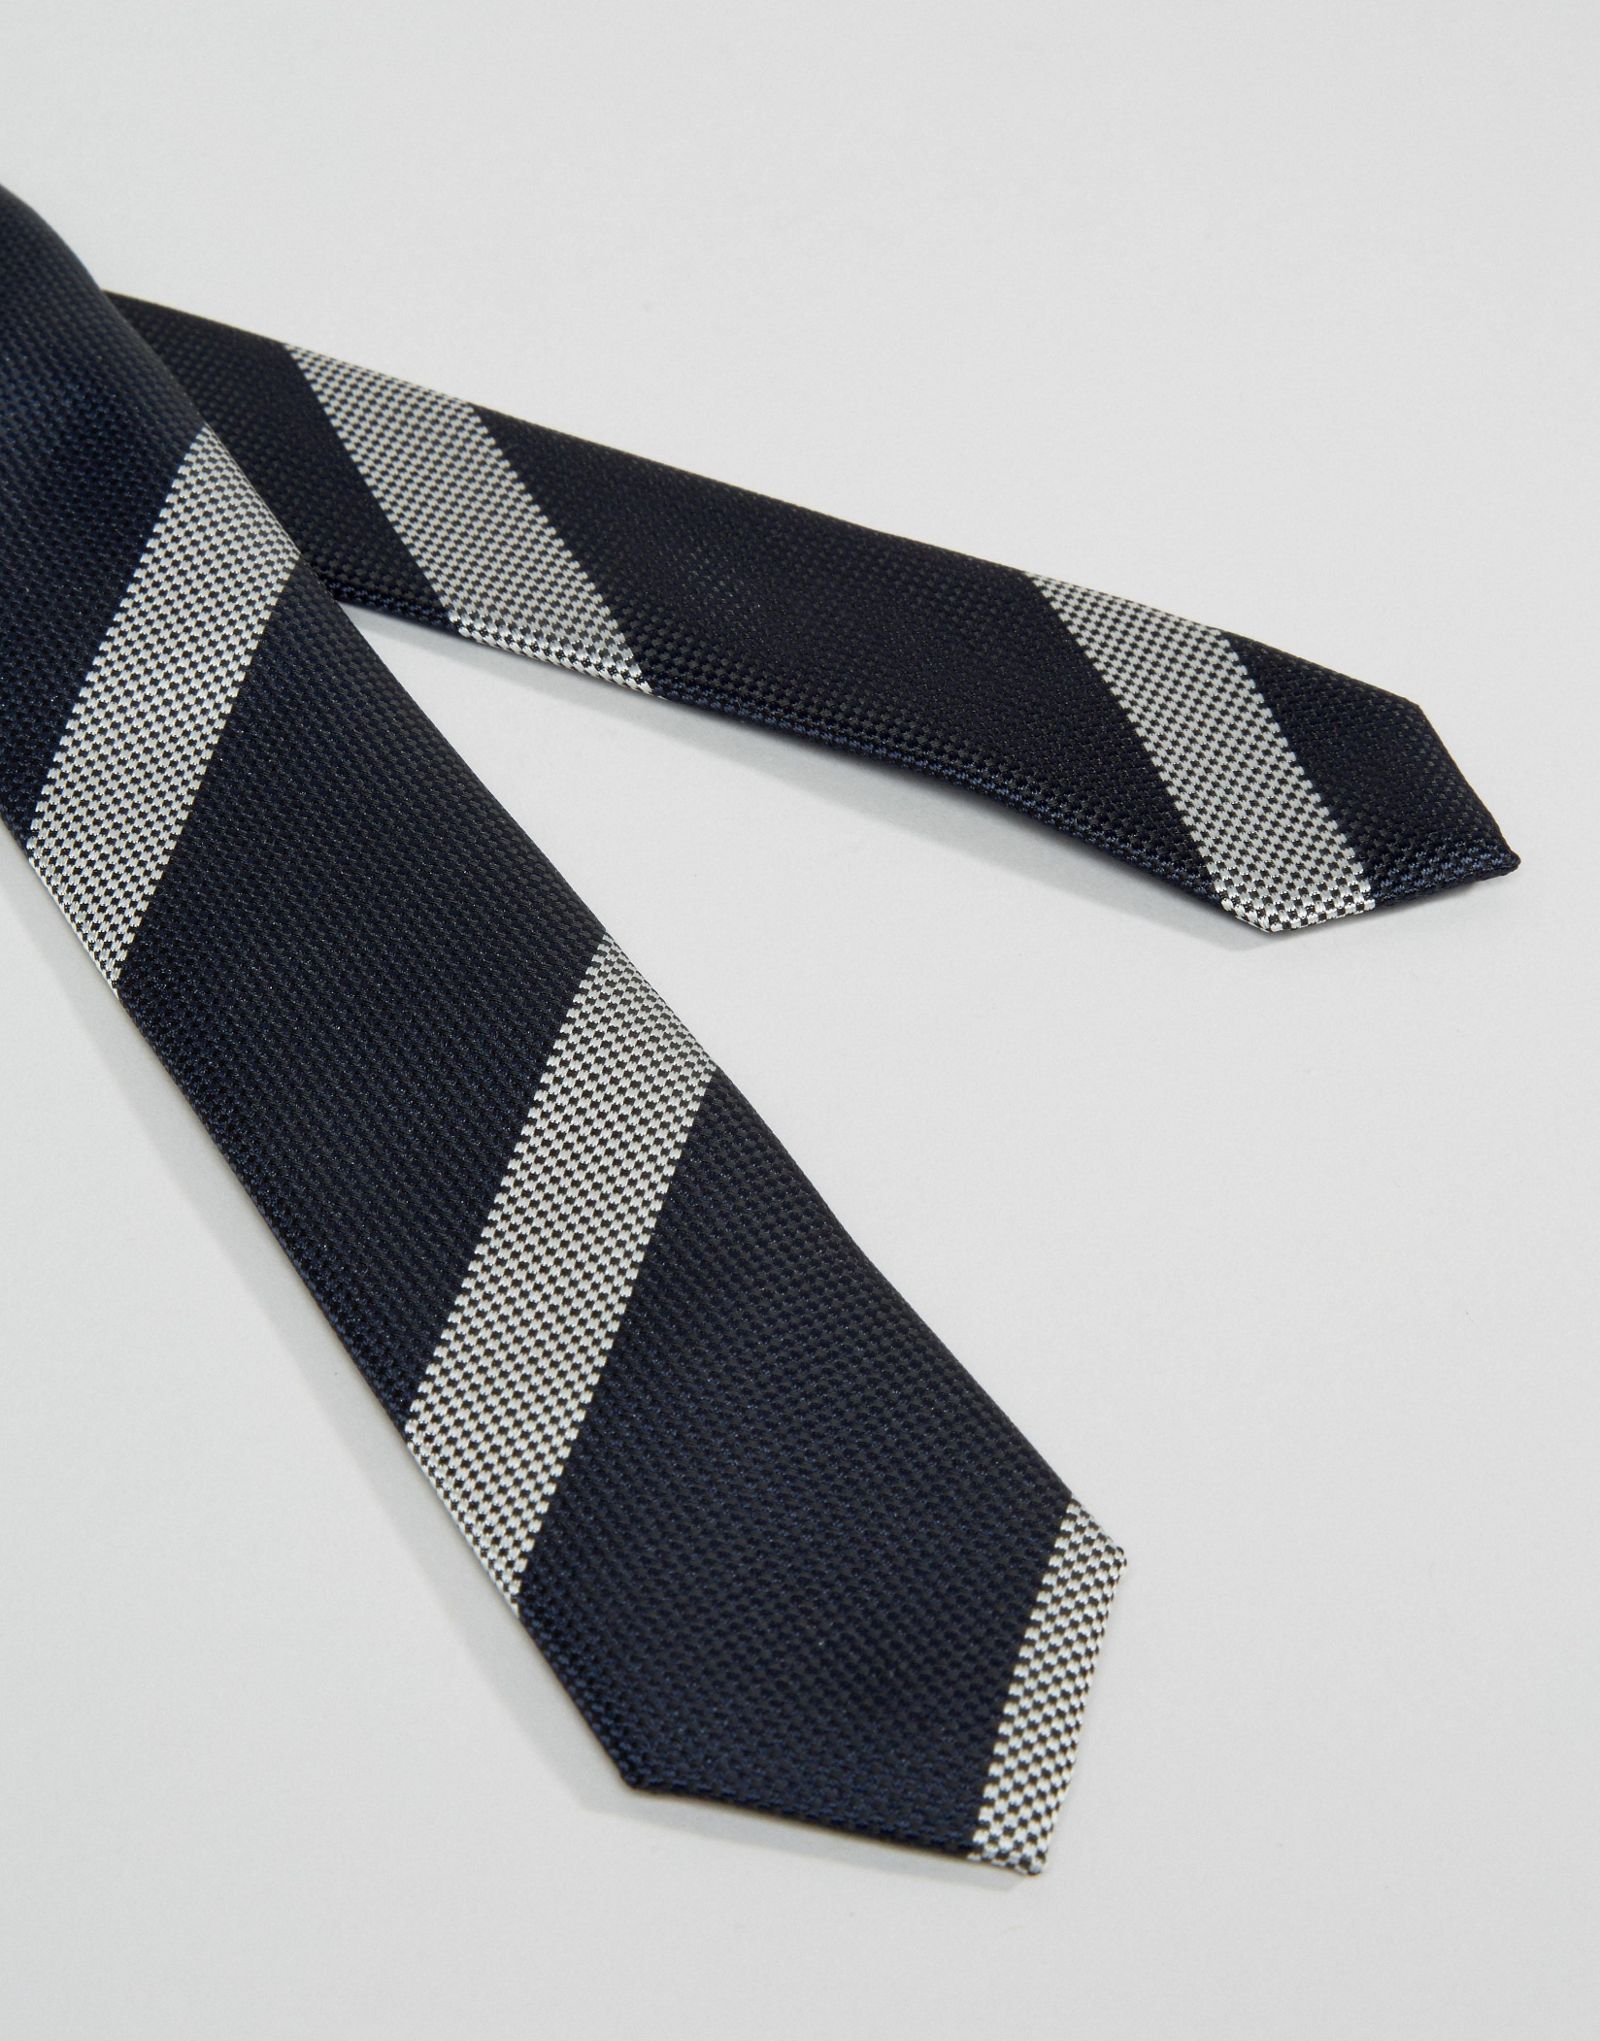 ASOS Stripe Tie In Navy